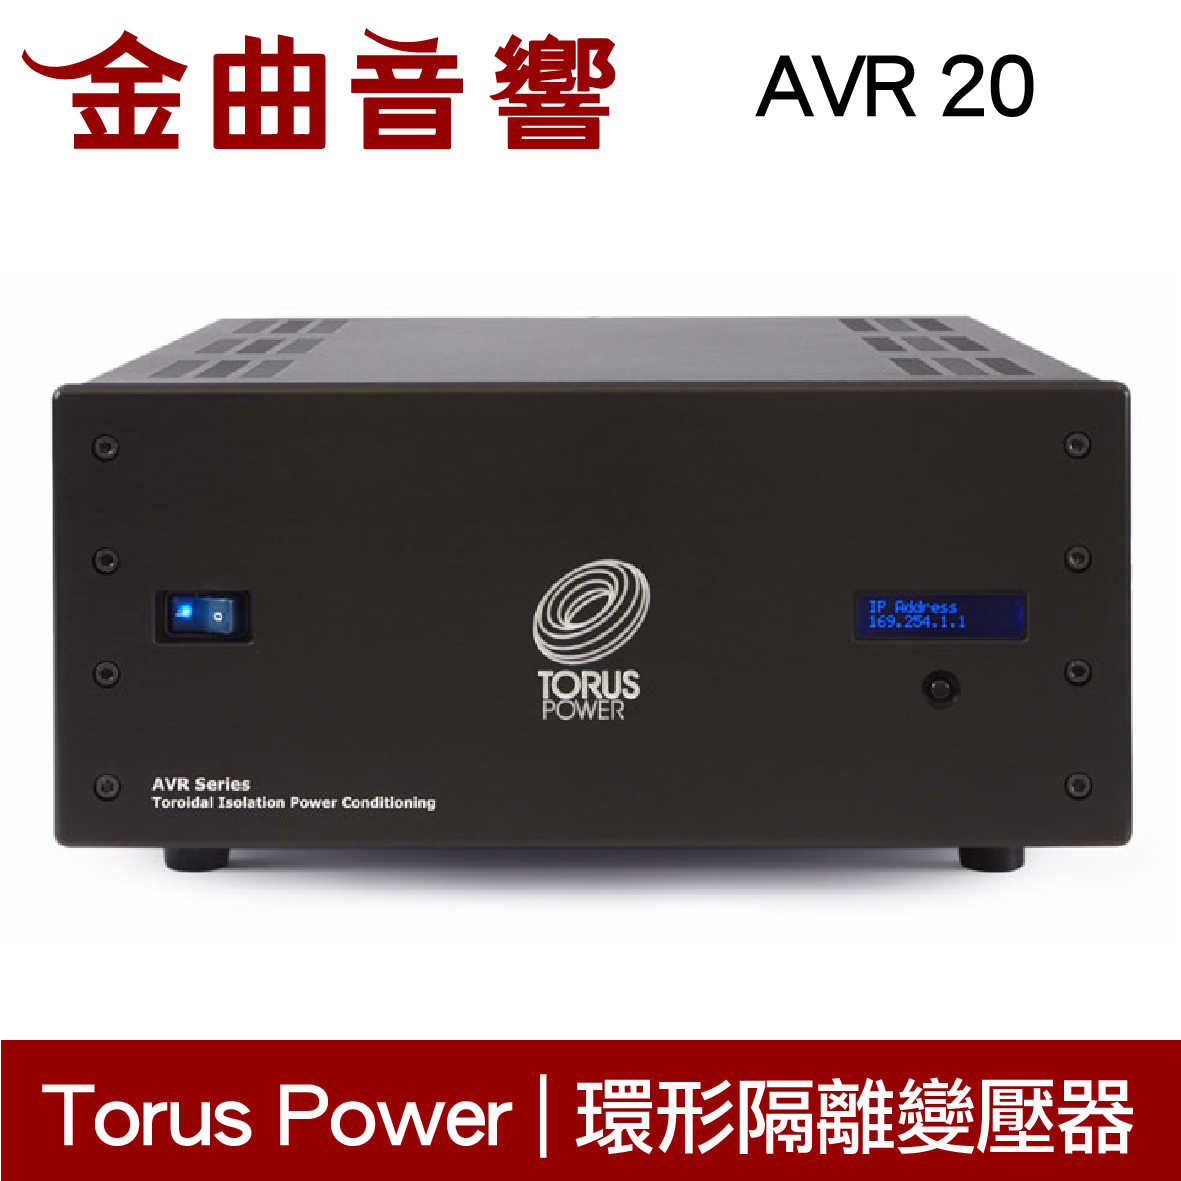 TORUS POWER AVR 20 黑色 電器處理 環形隔離處理器 | 金曲音響